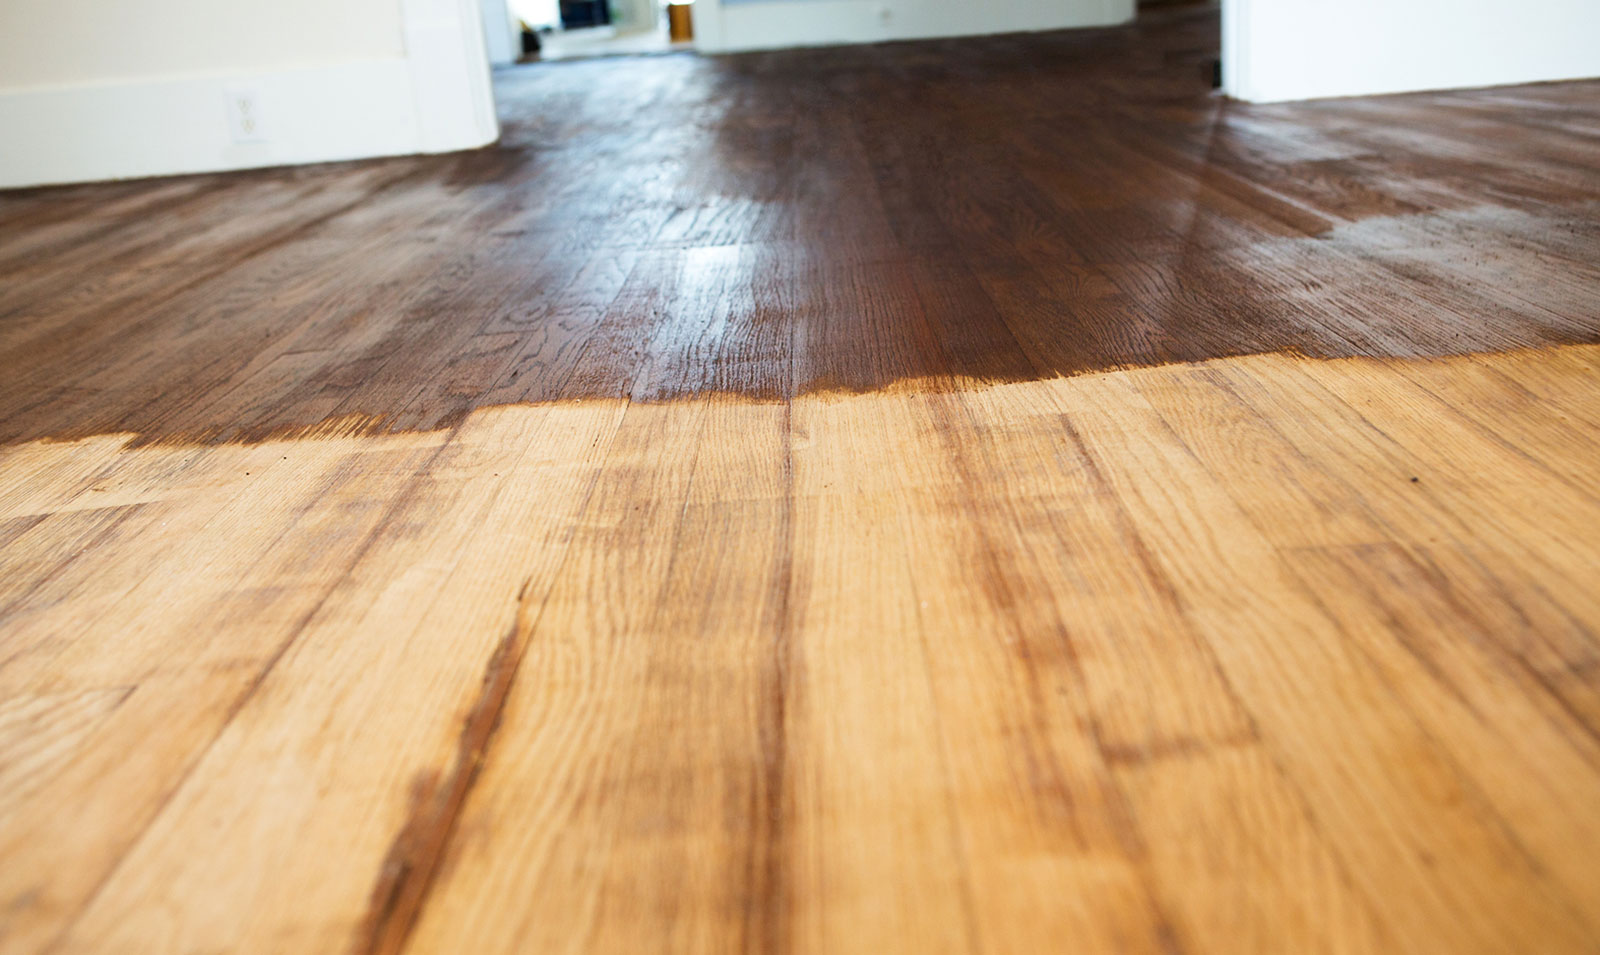 Southern Hardwood Floors Blanchard La, Southern Hardwood Floor Supply